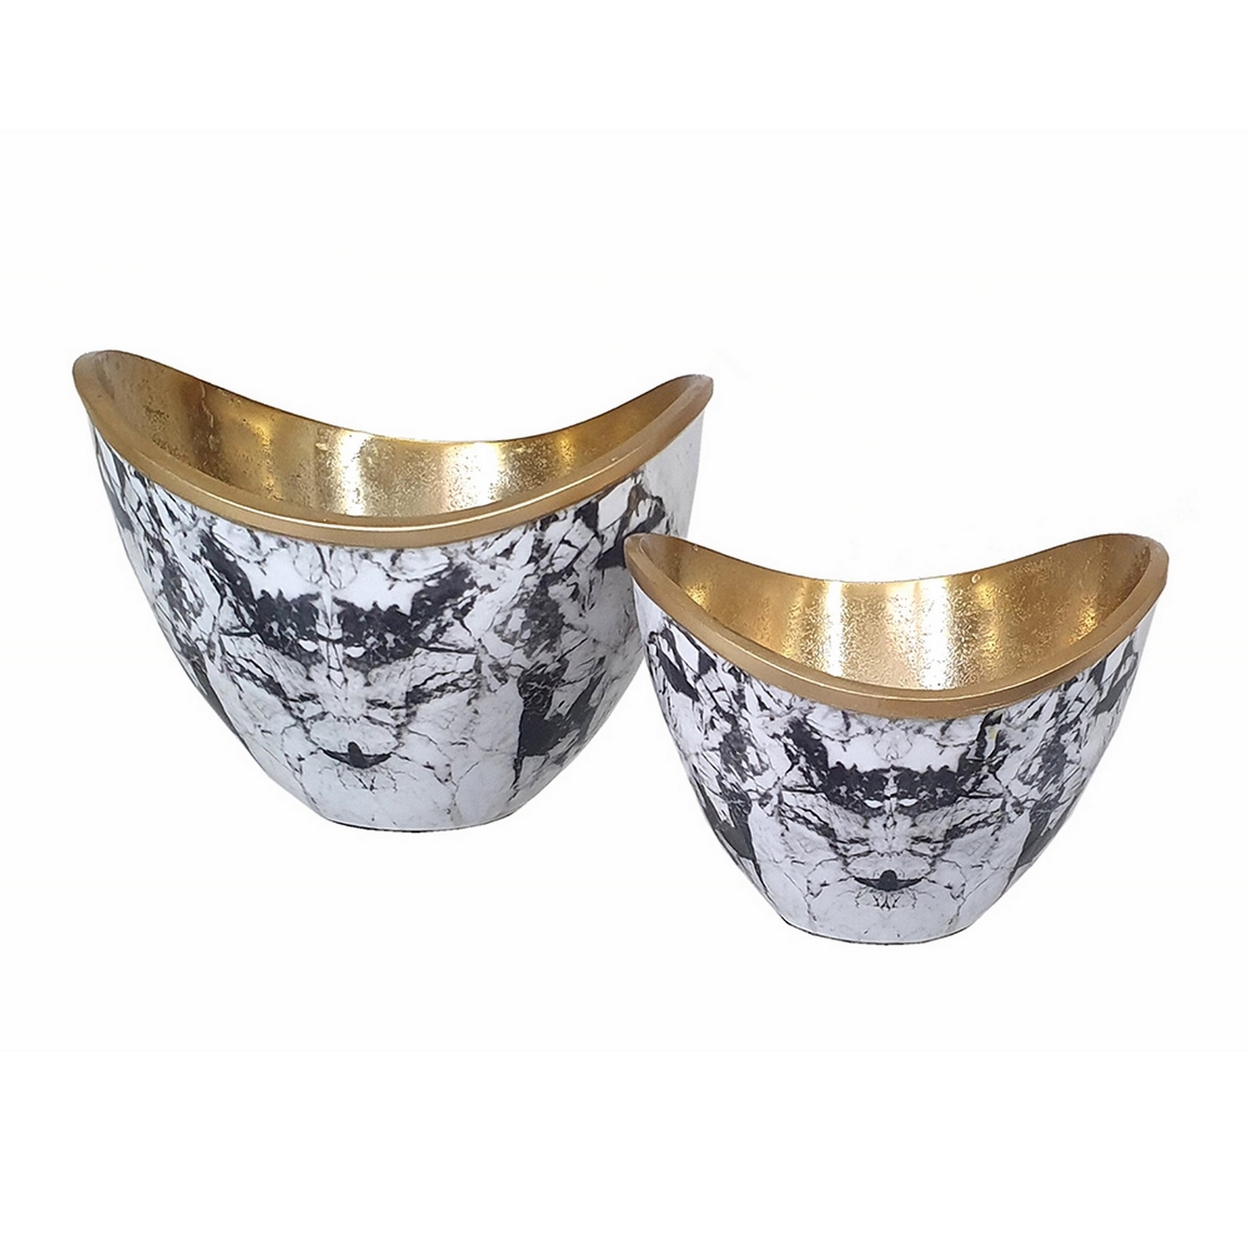 Sinzo Set Of 2 Curved Bowls, Gold Aluminum, Textured Design, Black, White- Saltoro Sherpi